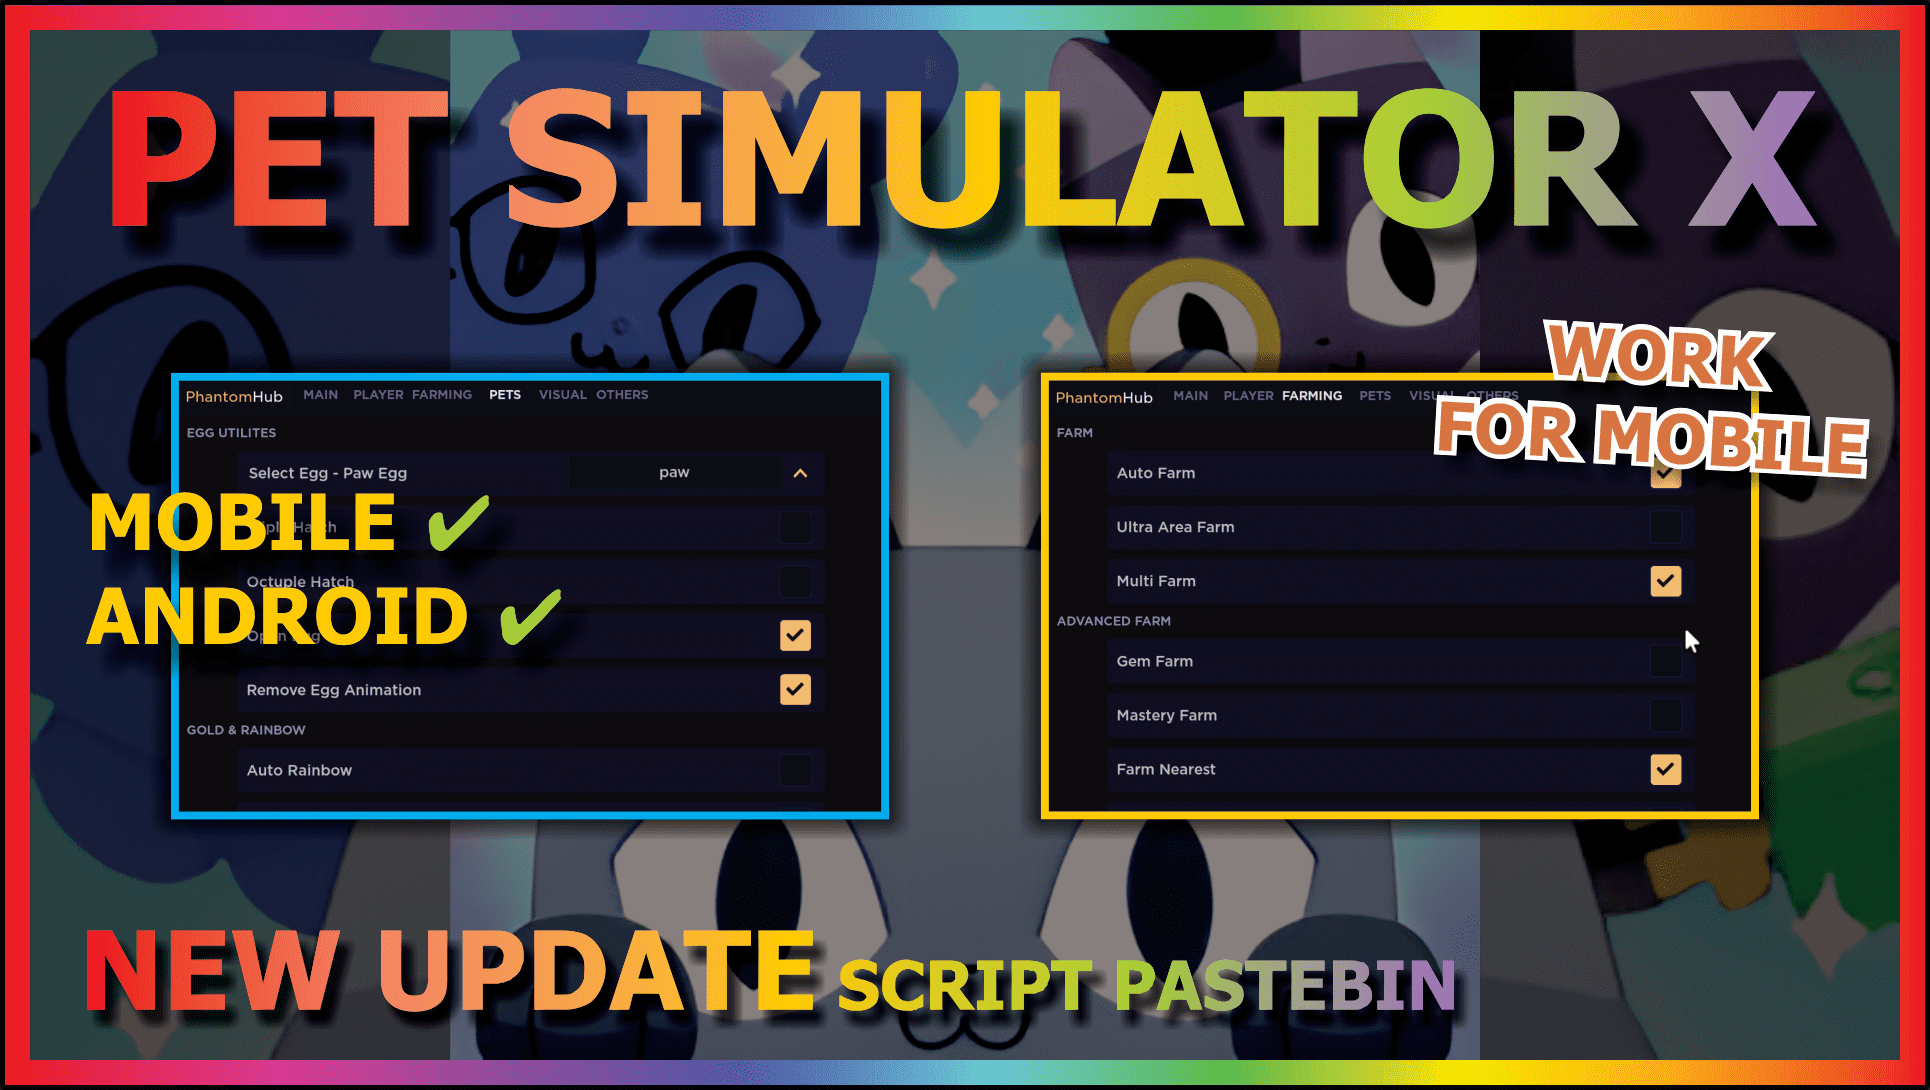 Pet Simulator X [Auto Farm, Auto Open Egg, Unlock Gamepasses] Scripts